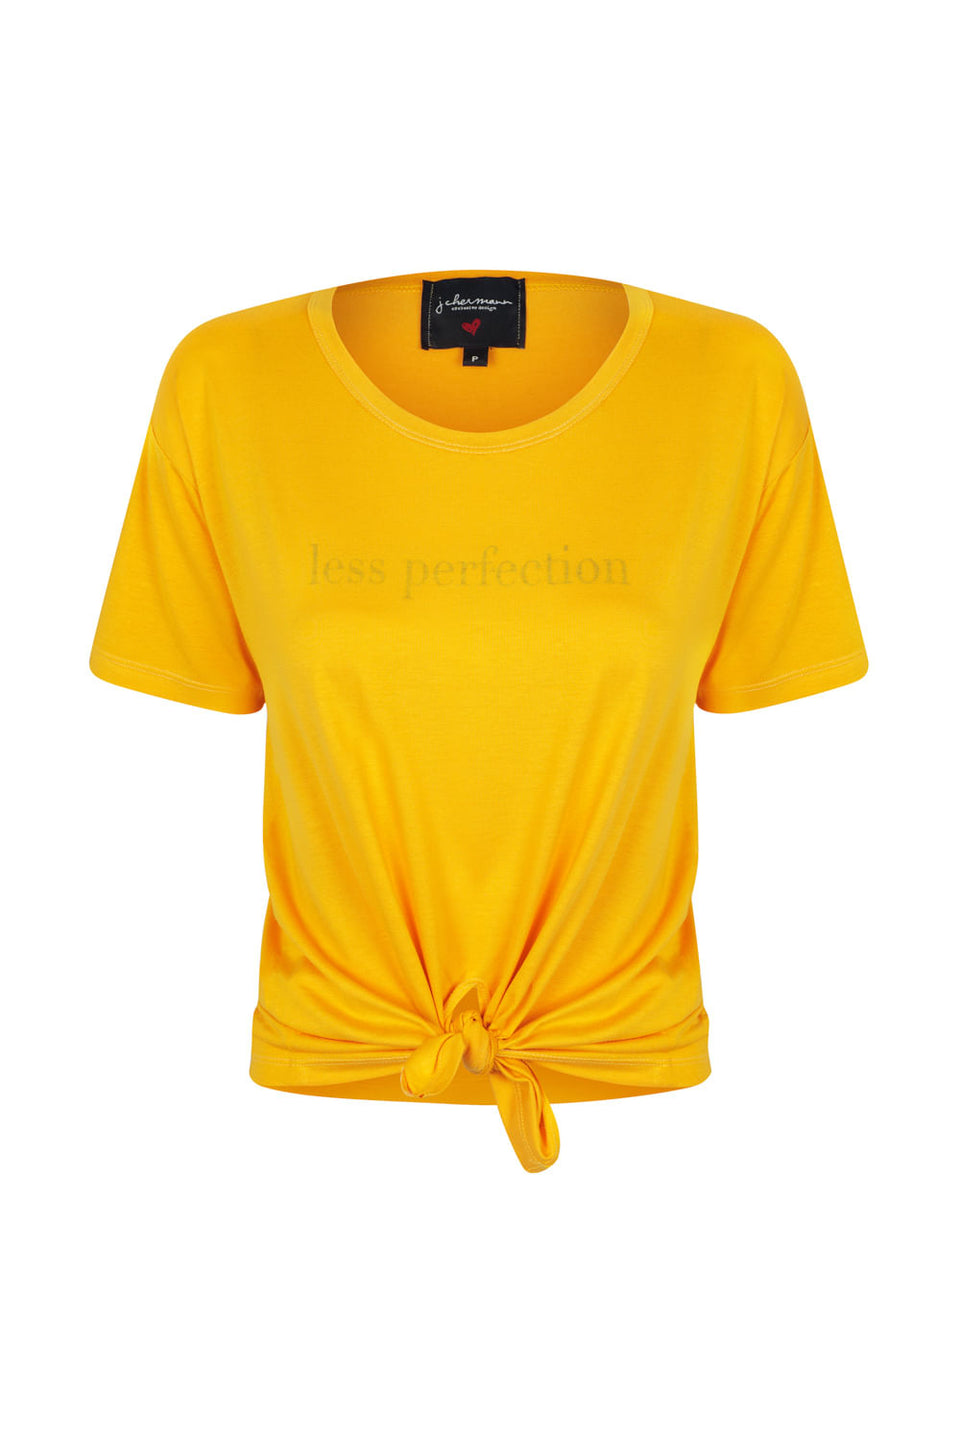 Camiseta Less Perfection Amarelo